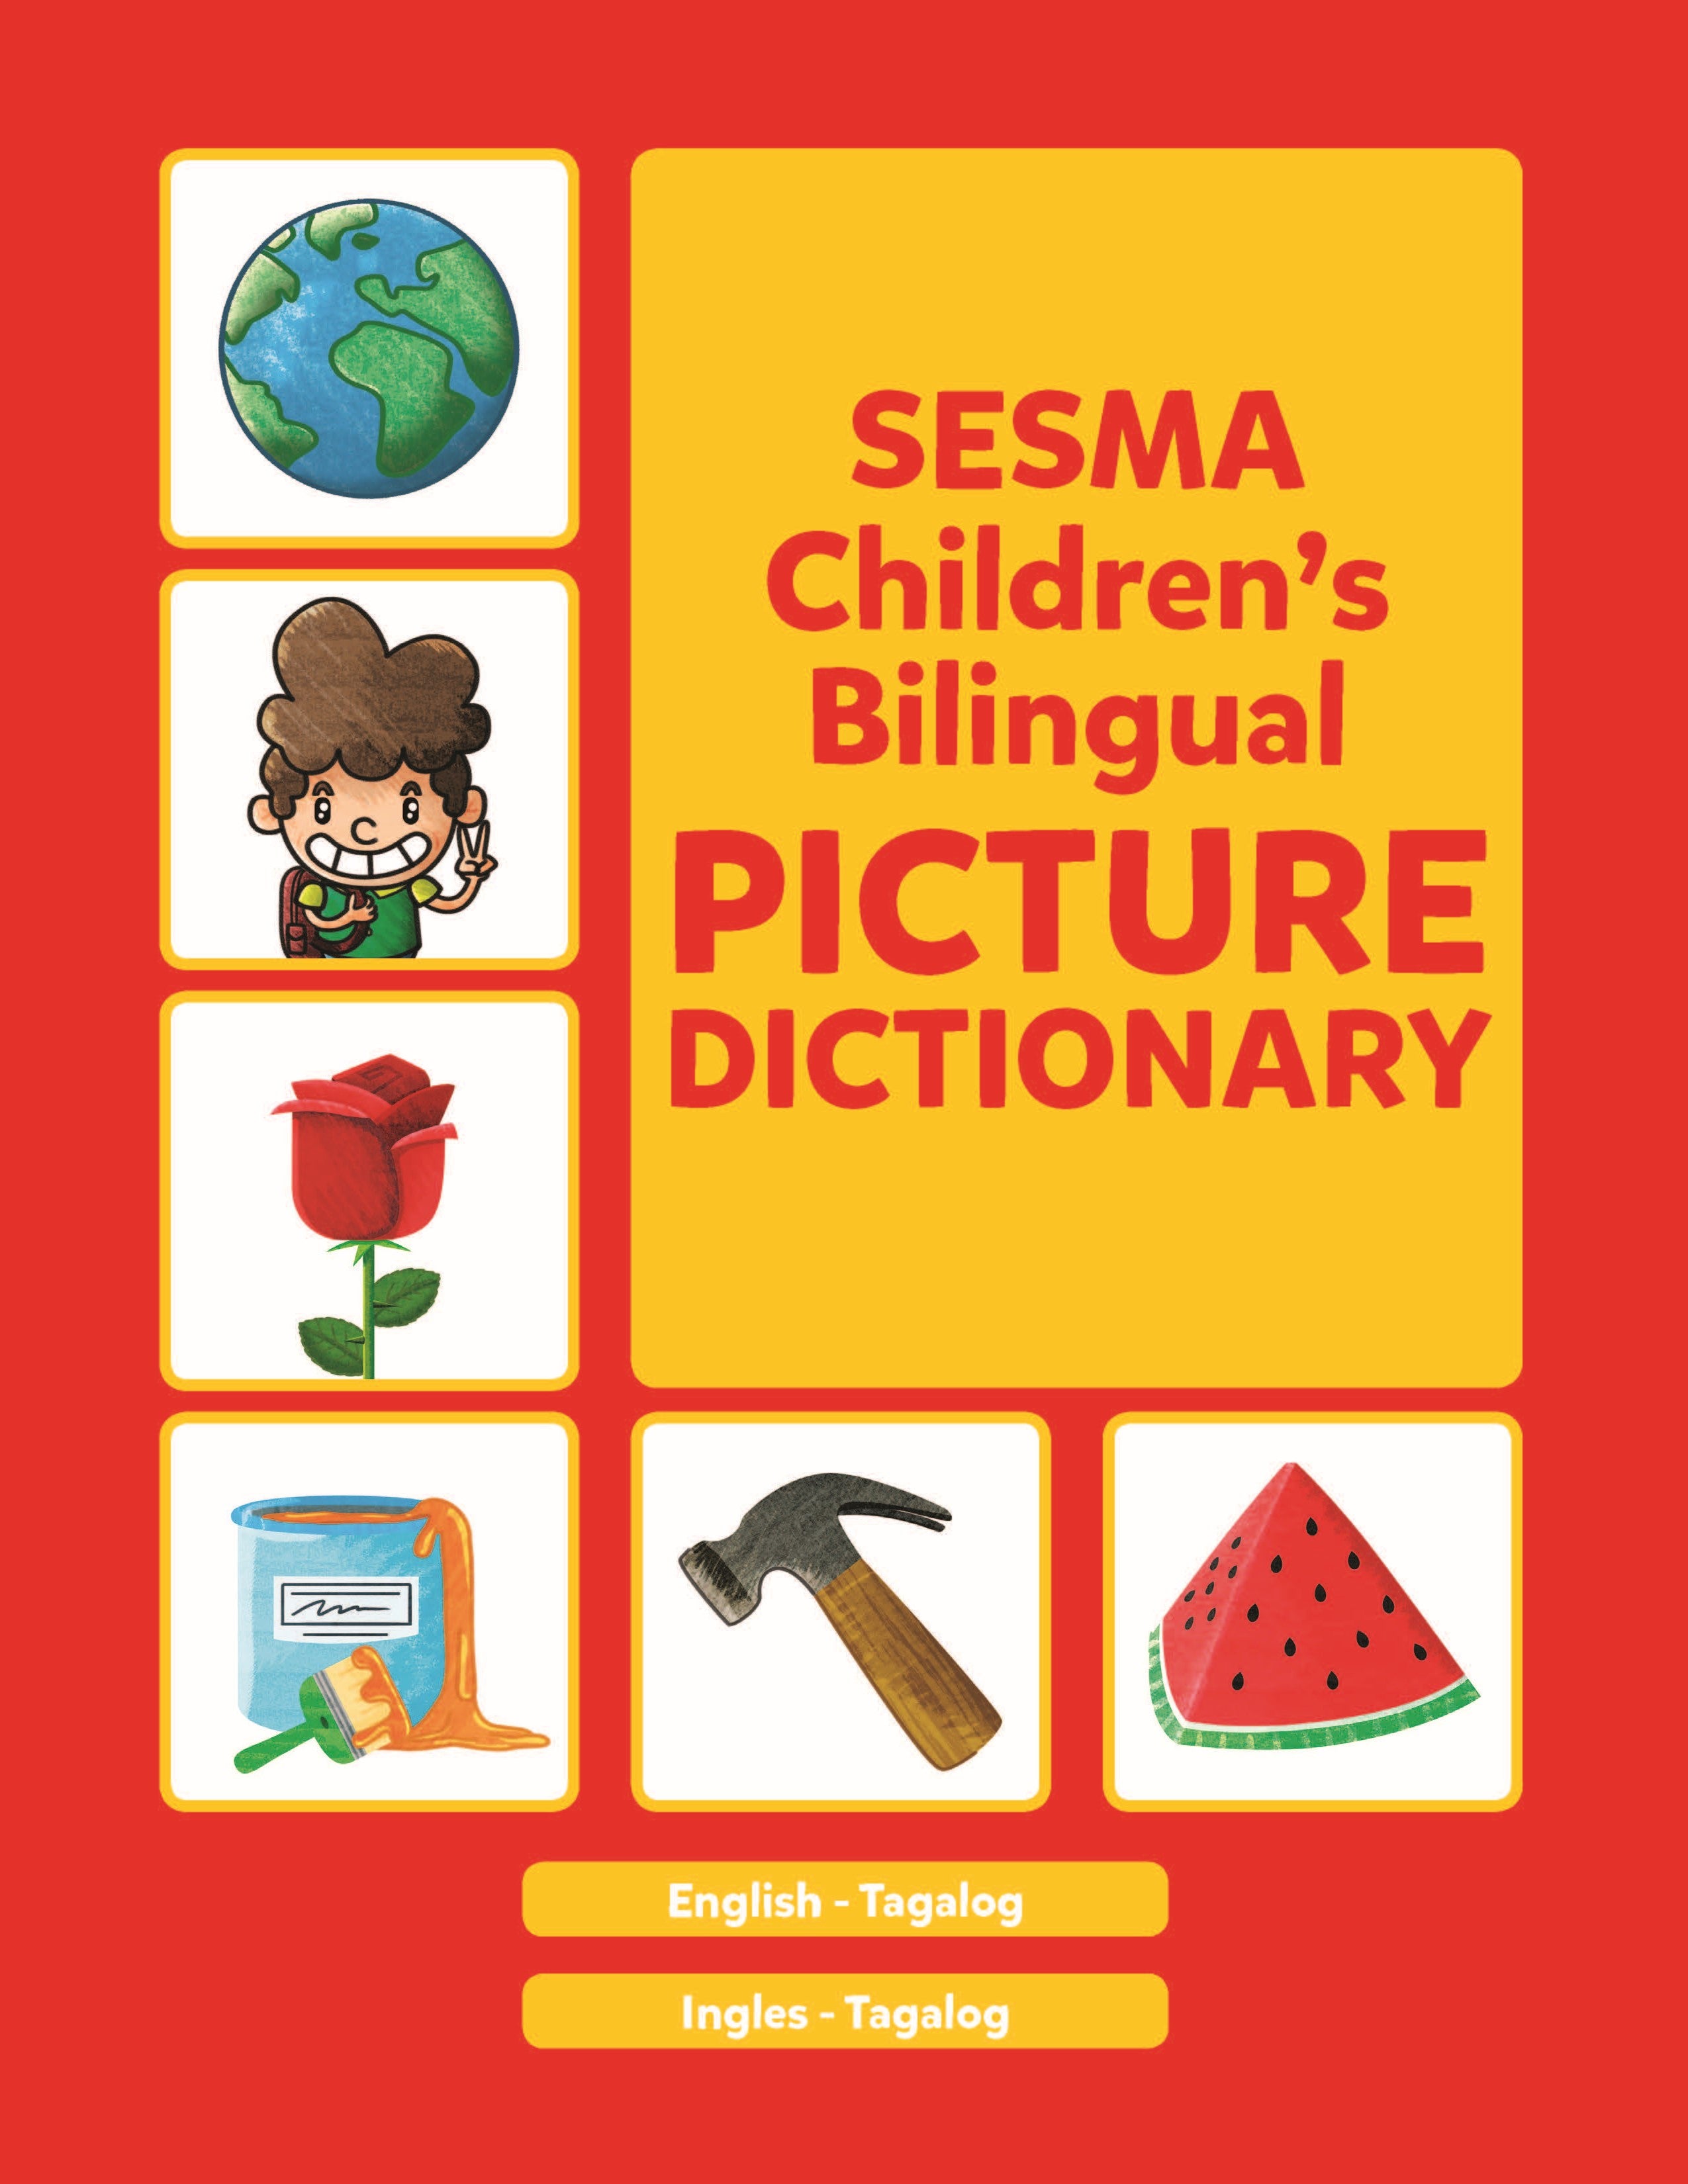 Tagalog-English Sesma Children's Bilingual Picture Dictionary